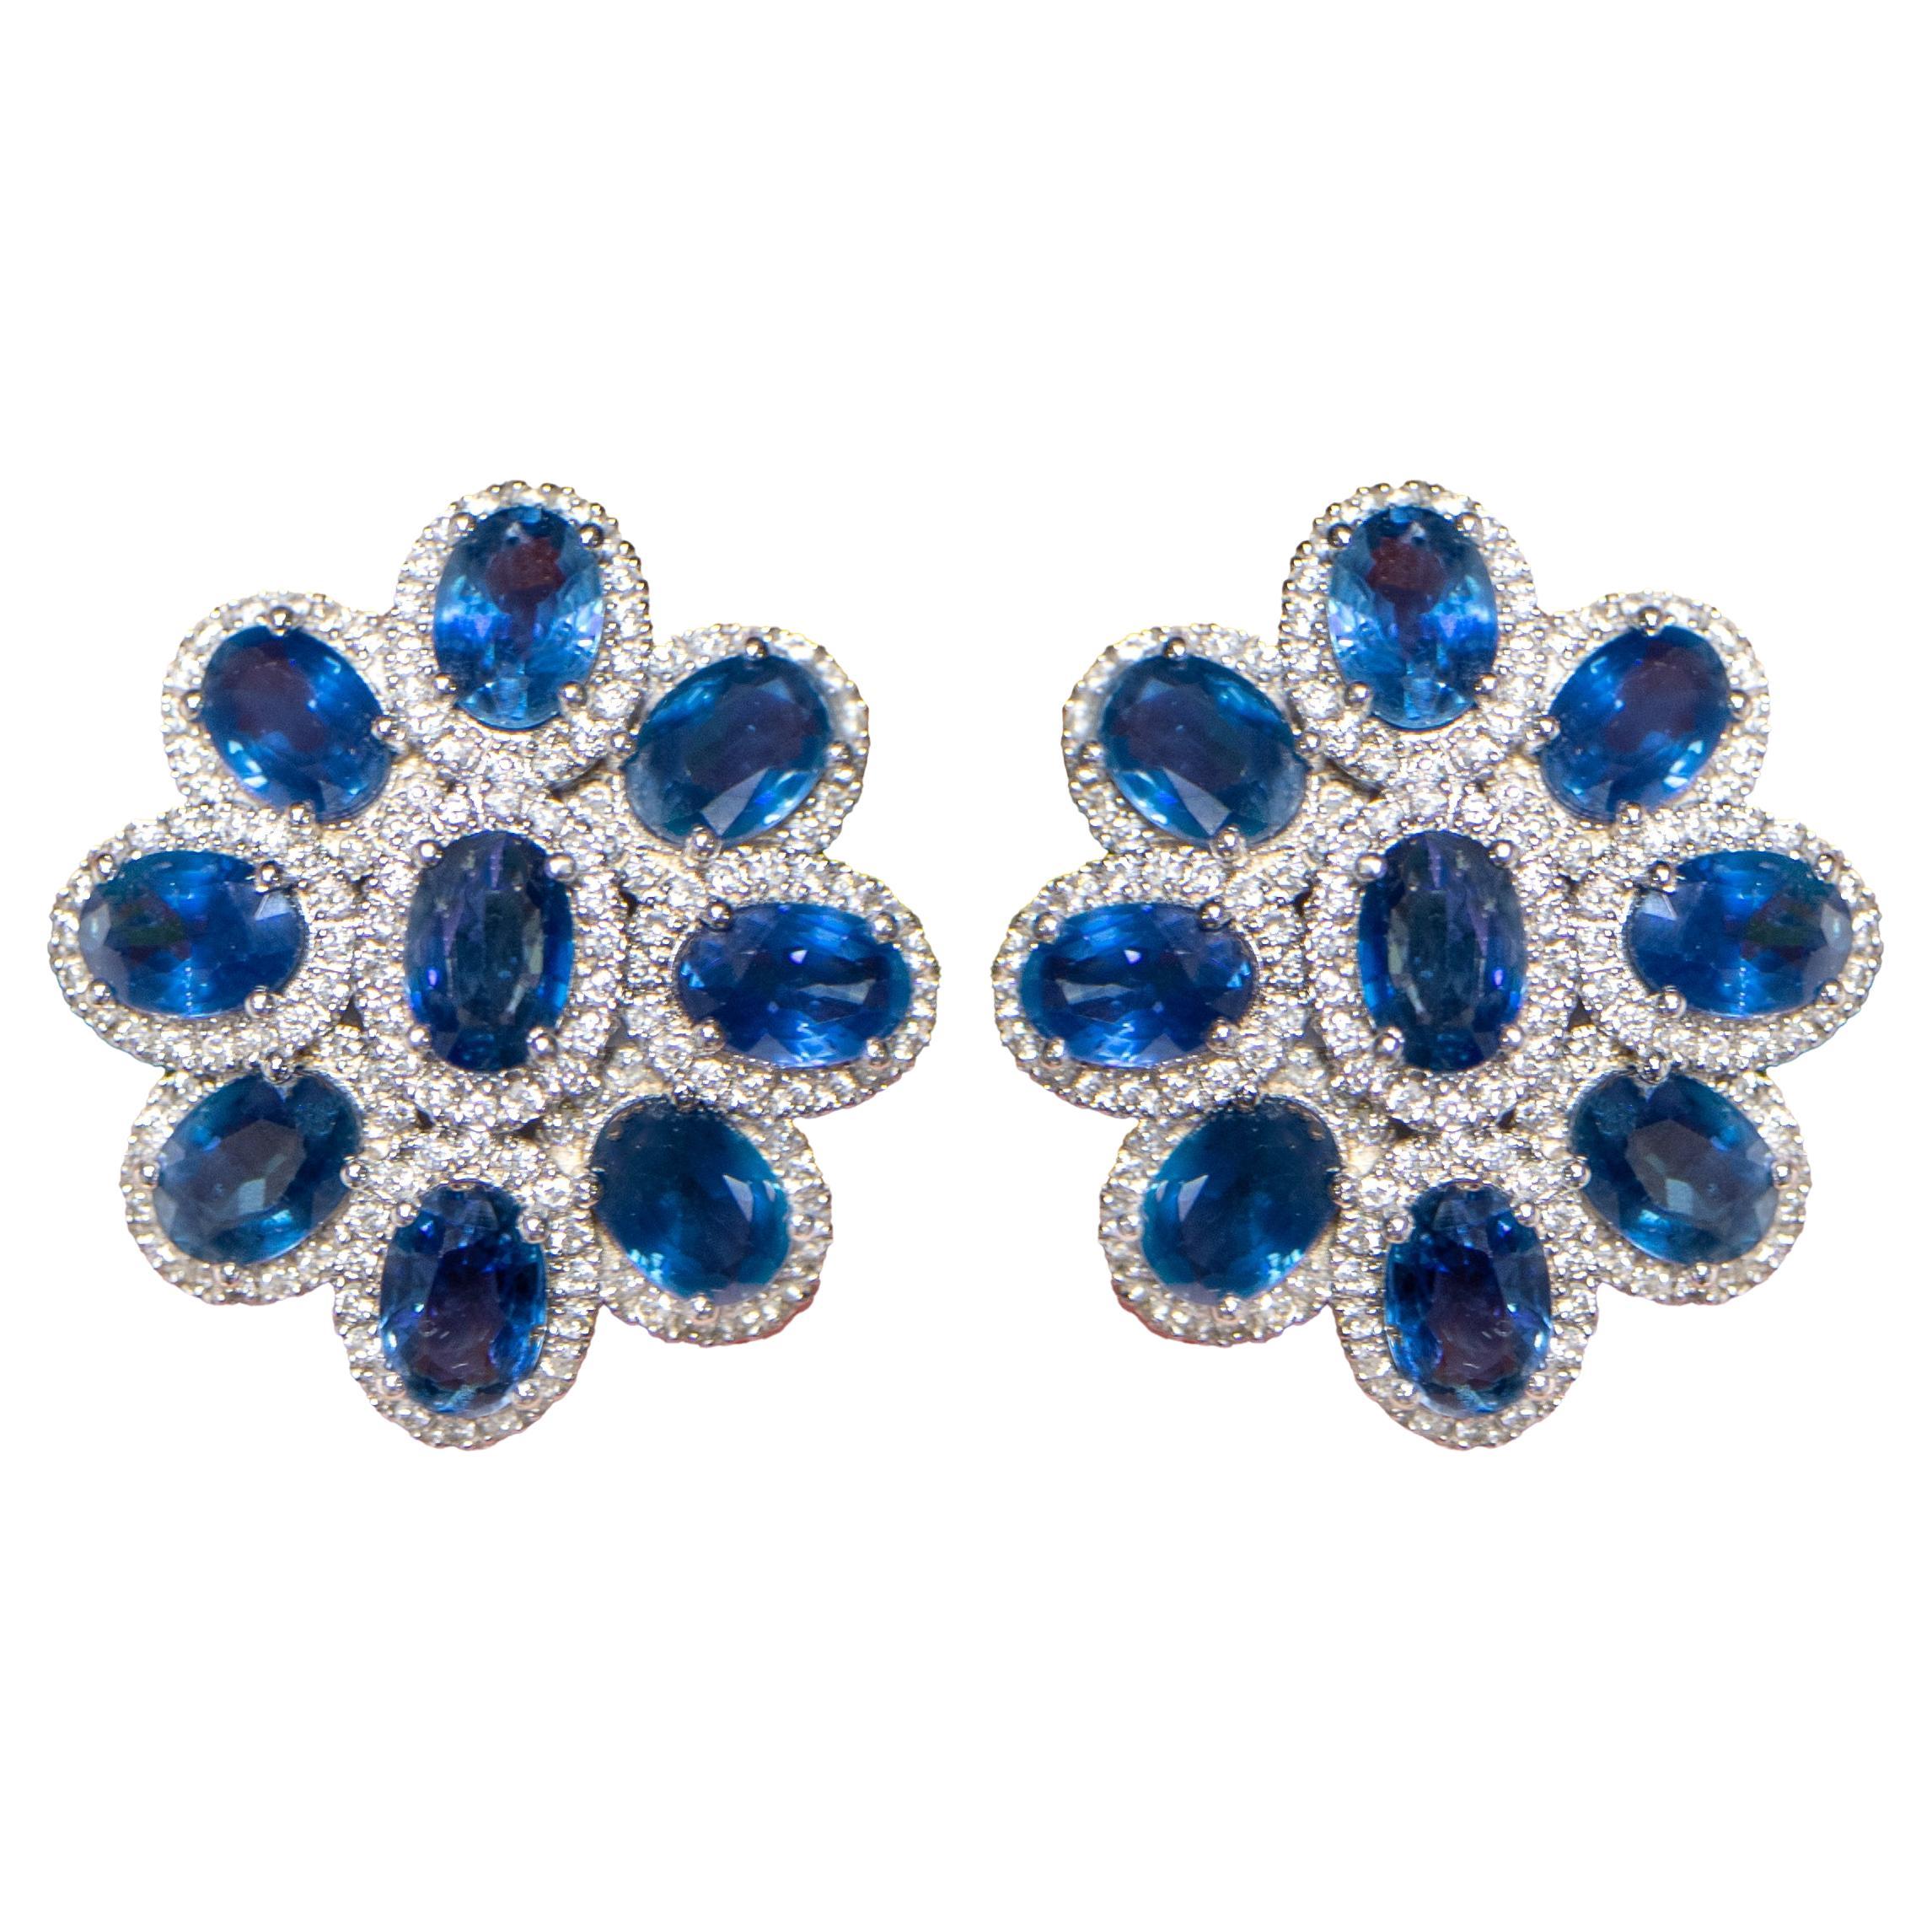 Blue Sapphire Flower Earrings With Diamonds 11 Carats 18K Gold